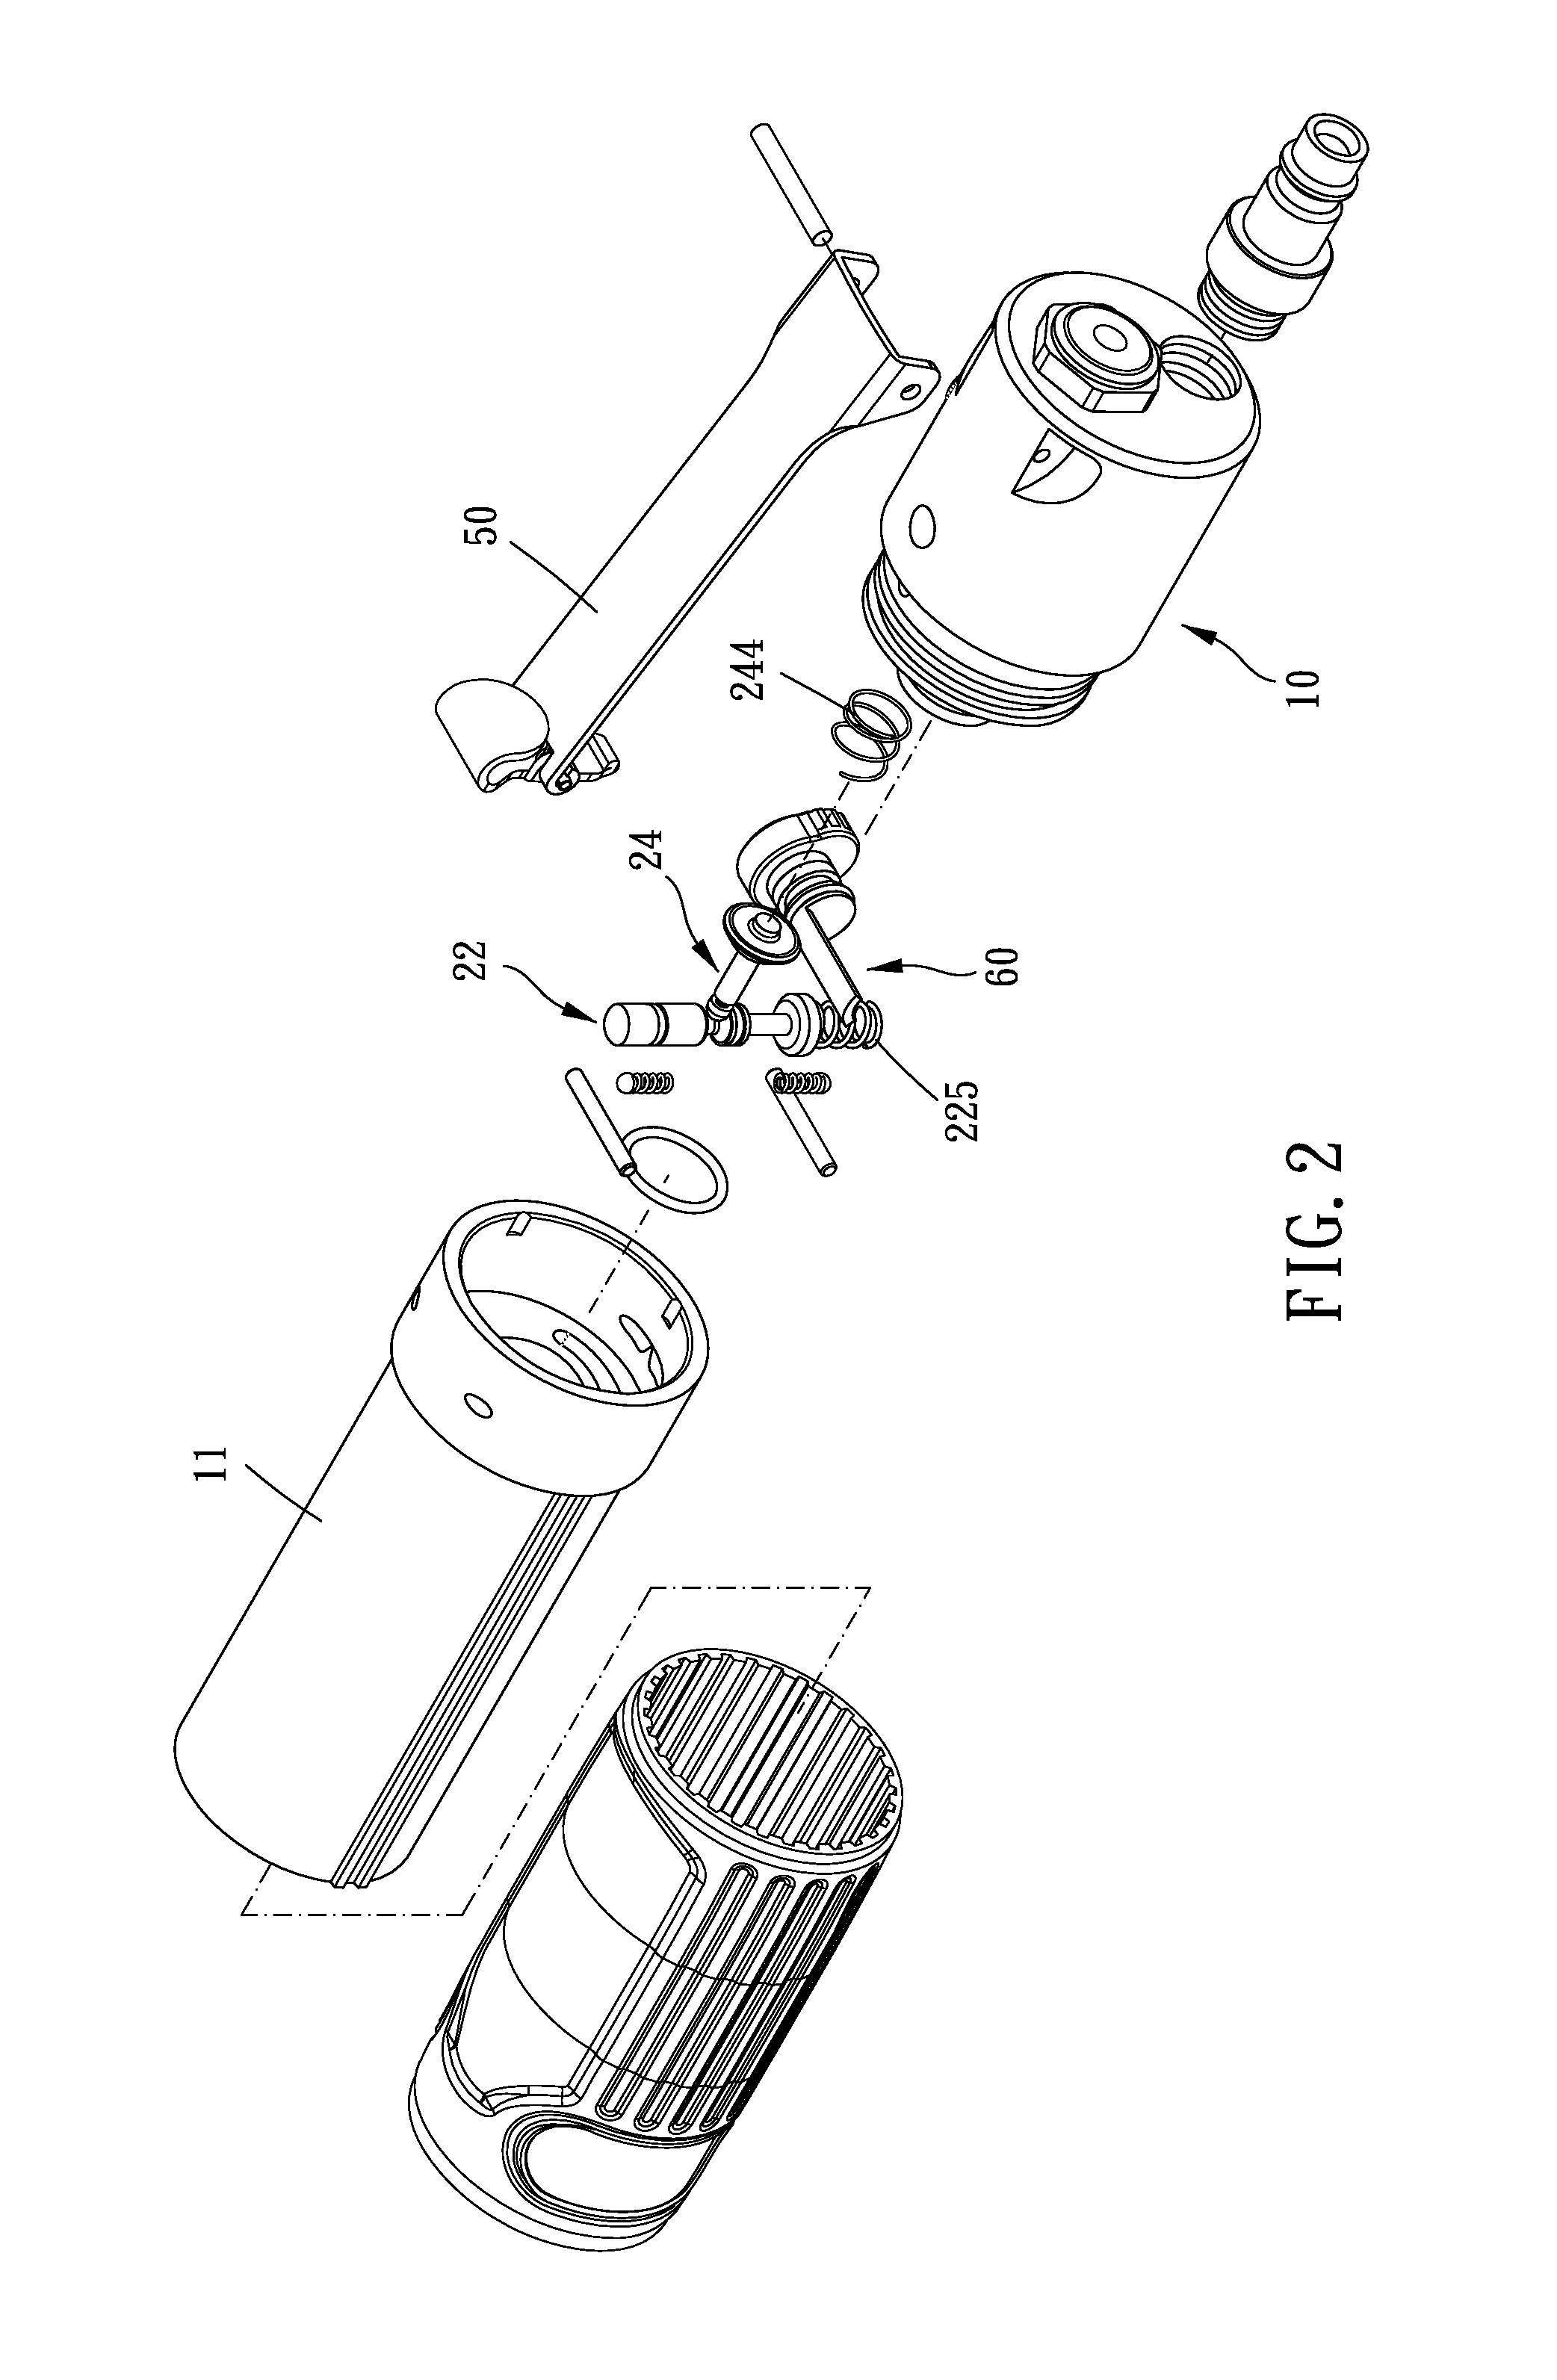 Double-valve mechanism